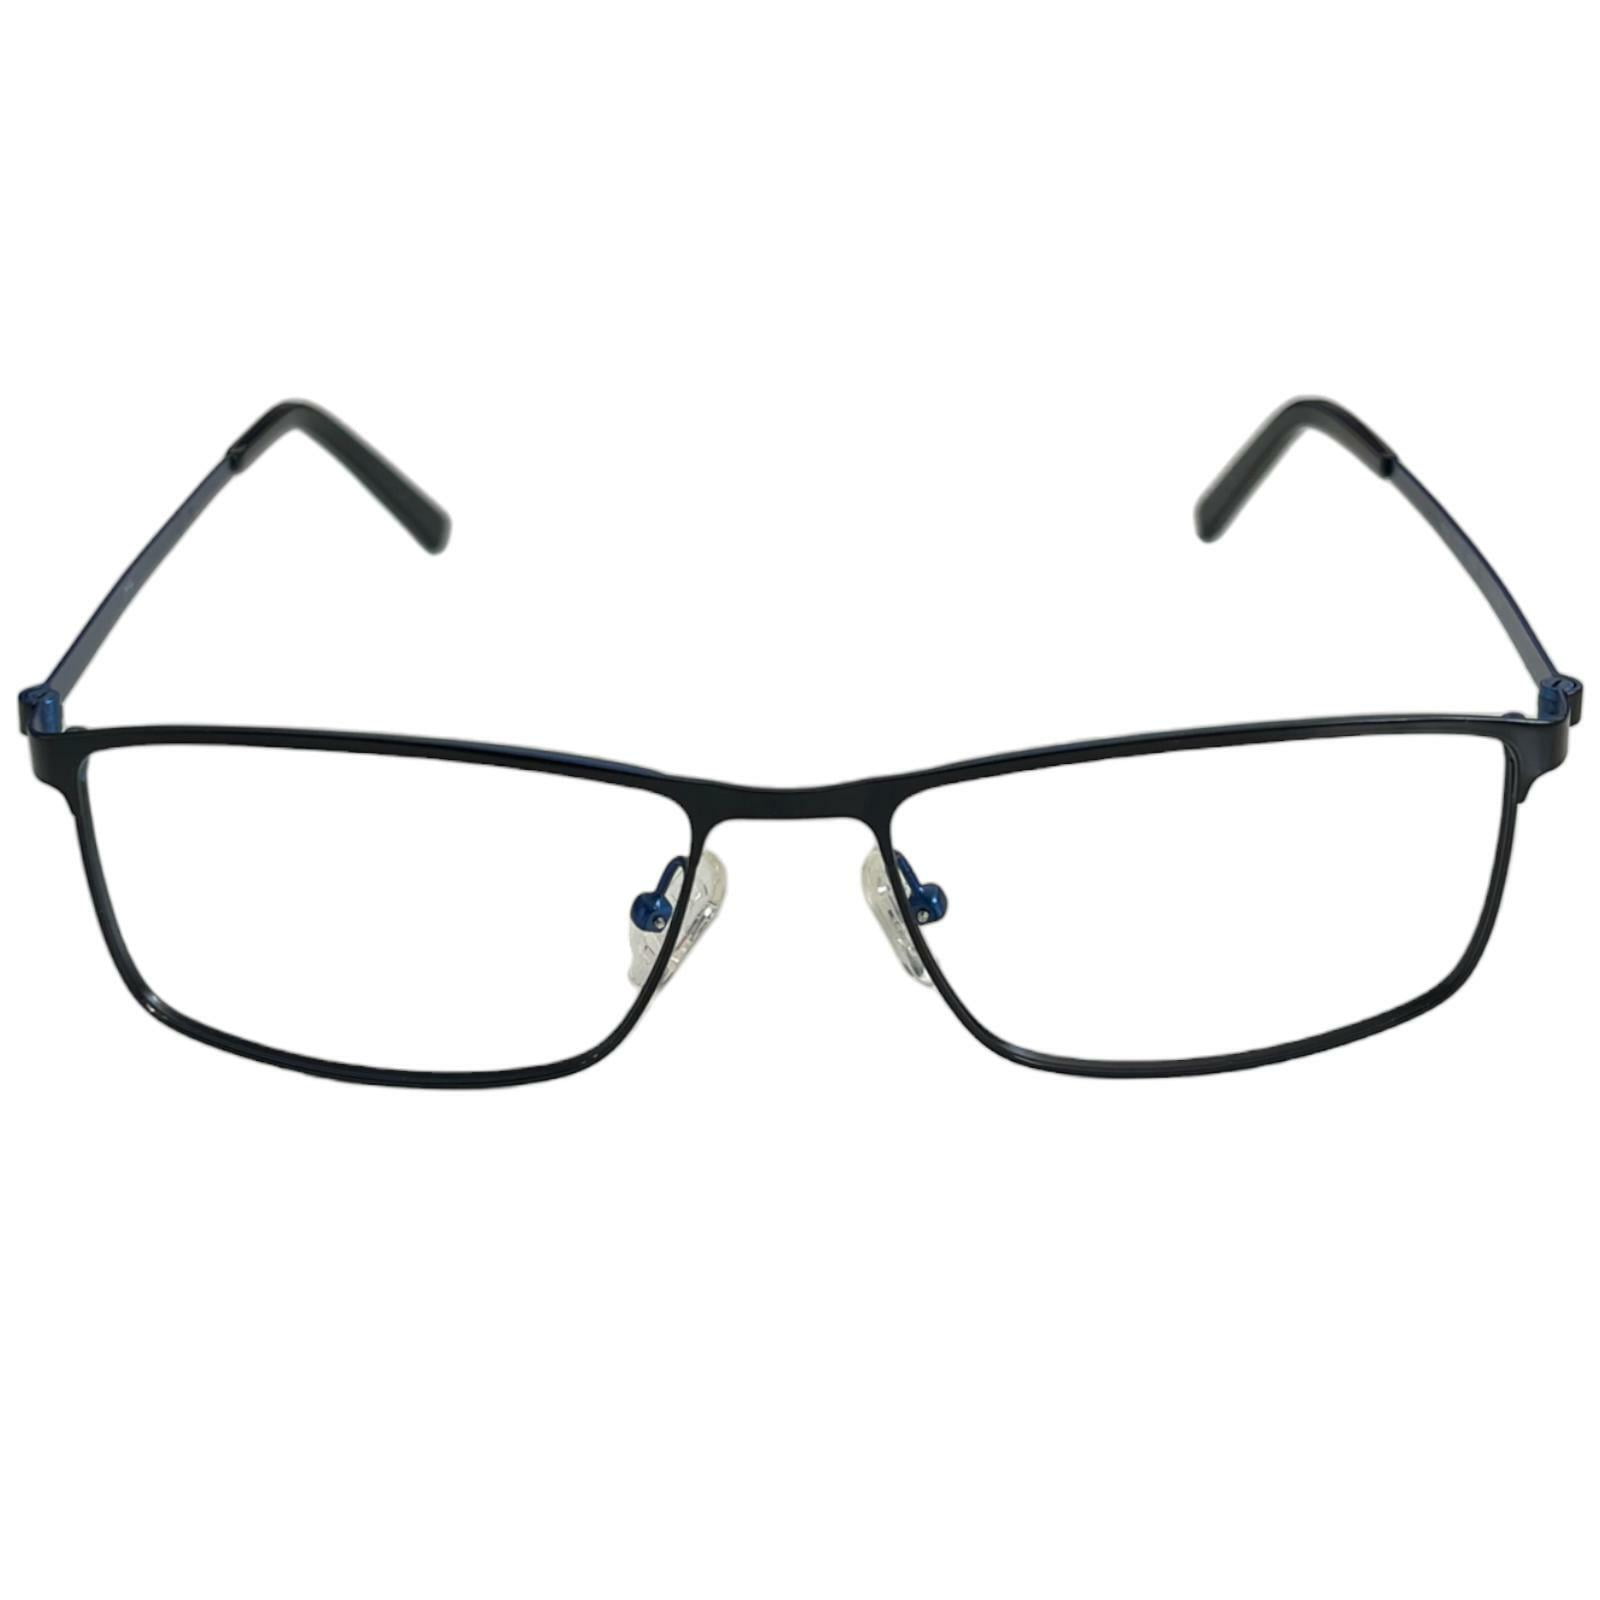 M+ Mens Eyeglass Blue Black Frames 1022 MBLK Size 55-16-140 - Walmart.com